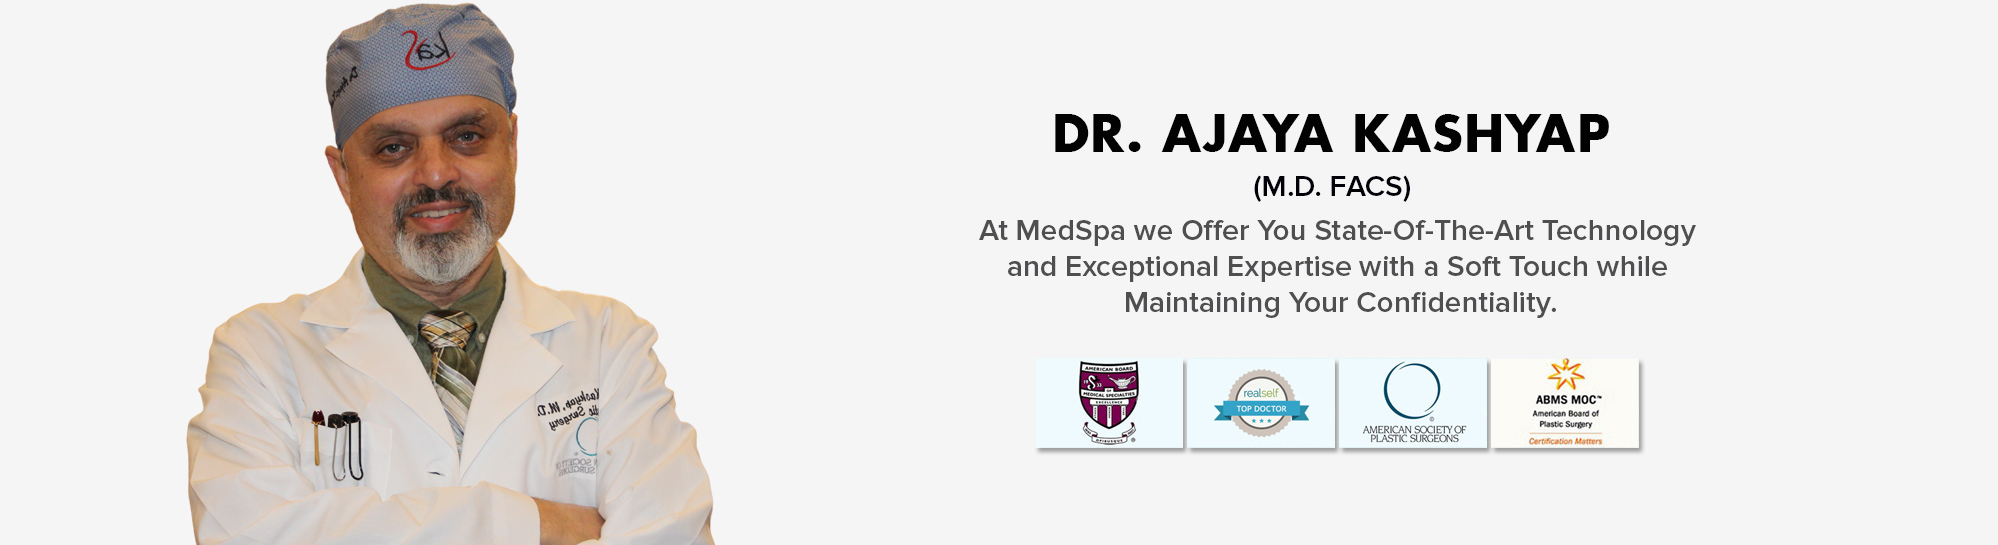 Dr Ajaya Kashyap certificate cosmetic surgeon in Delhi